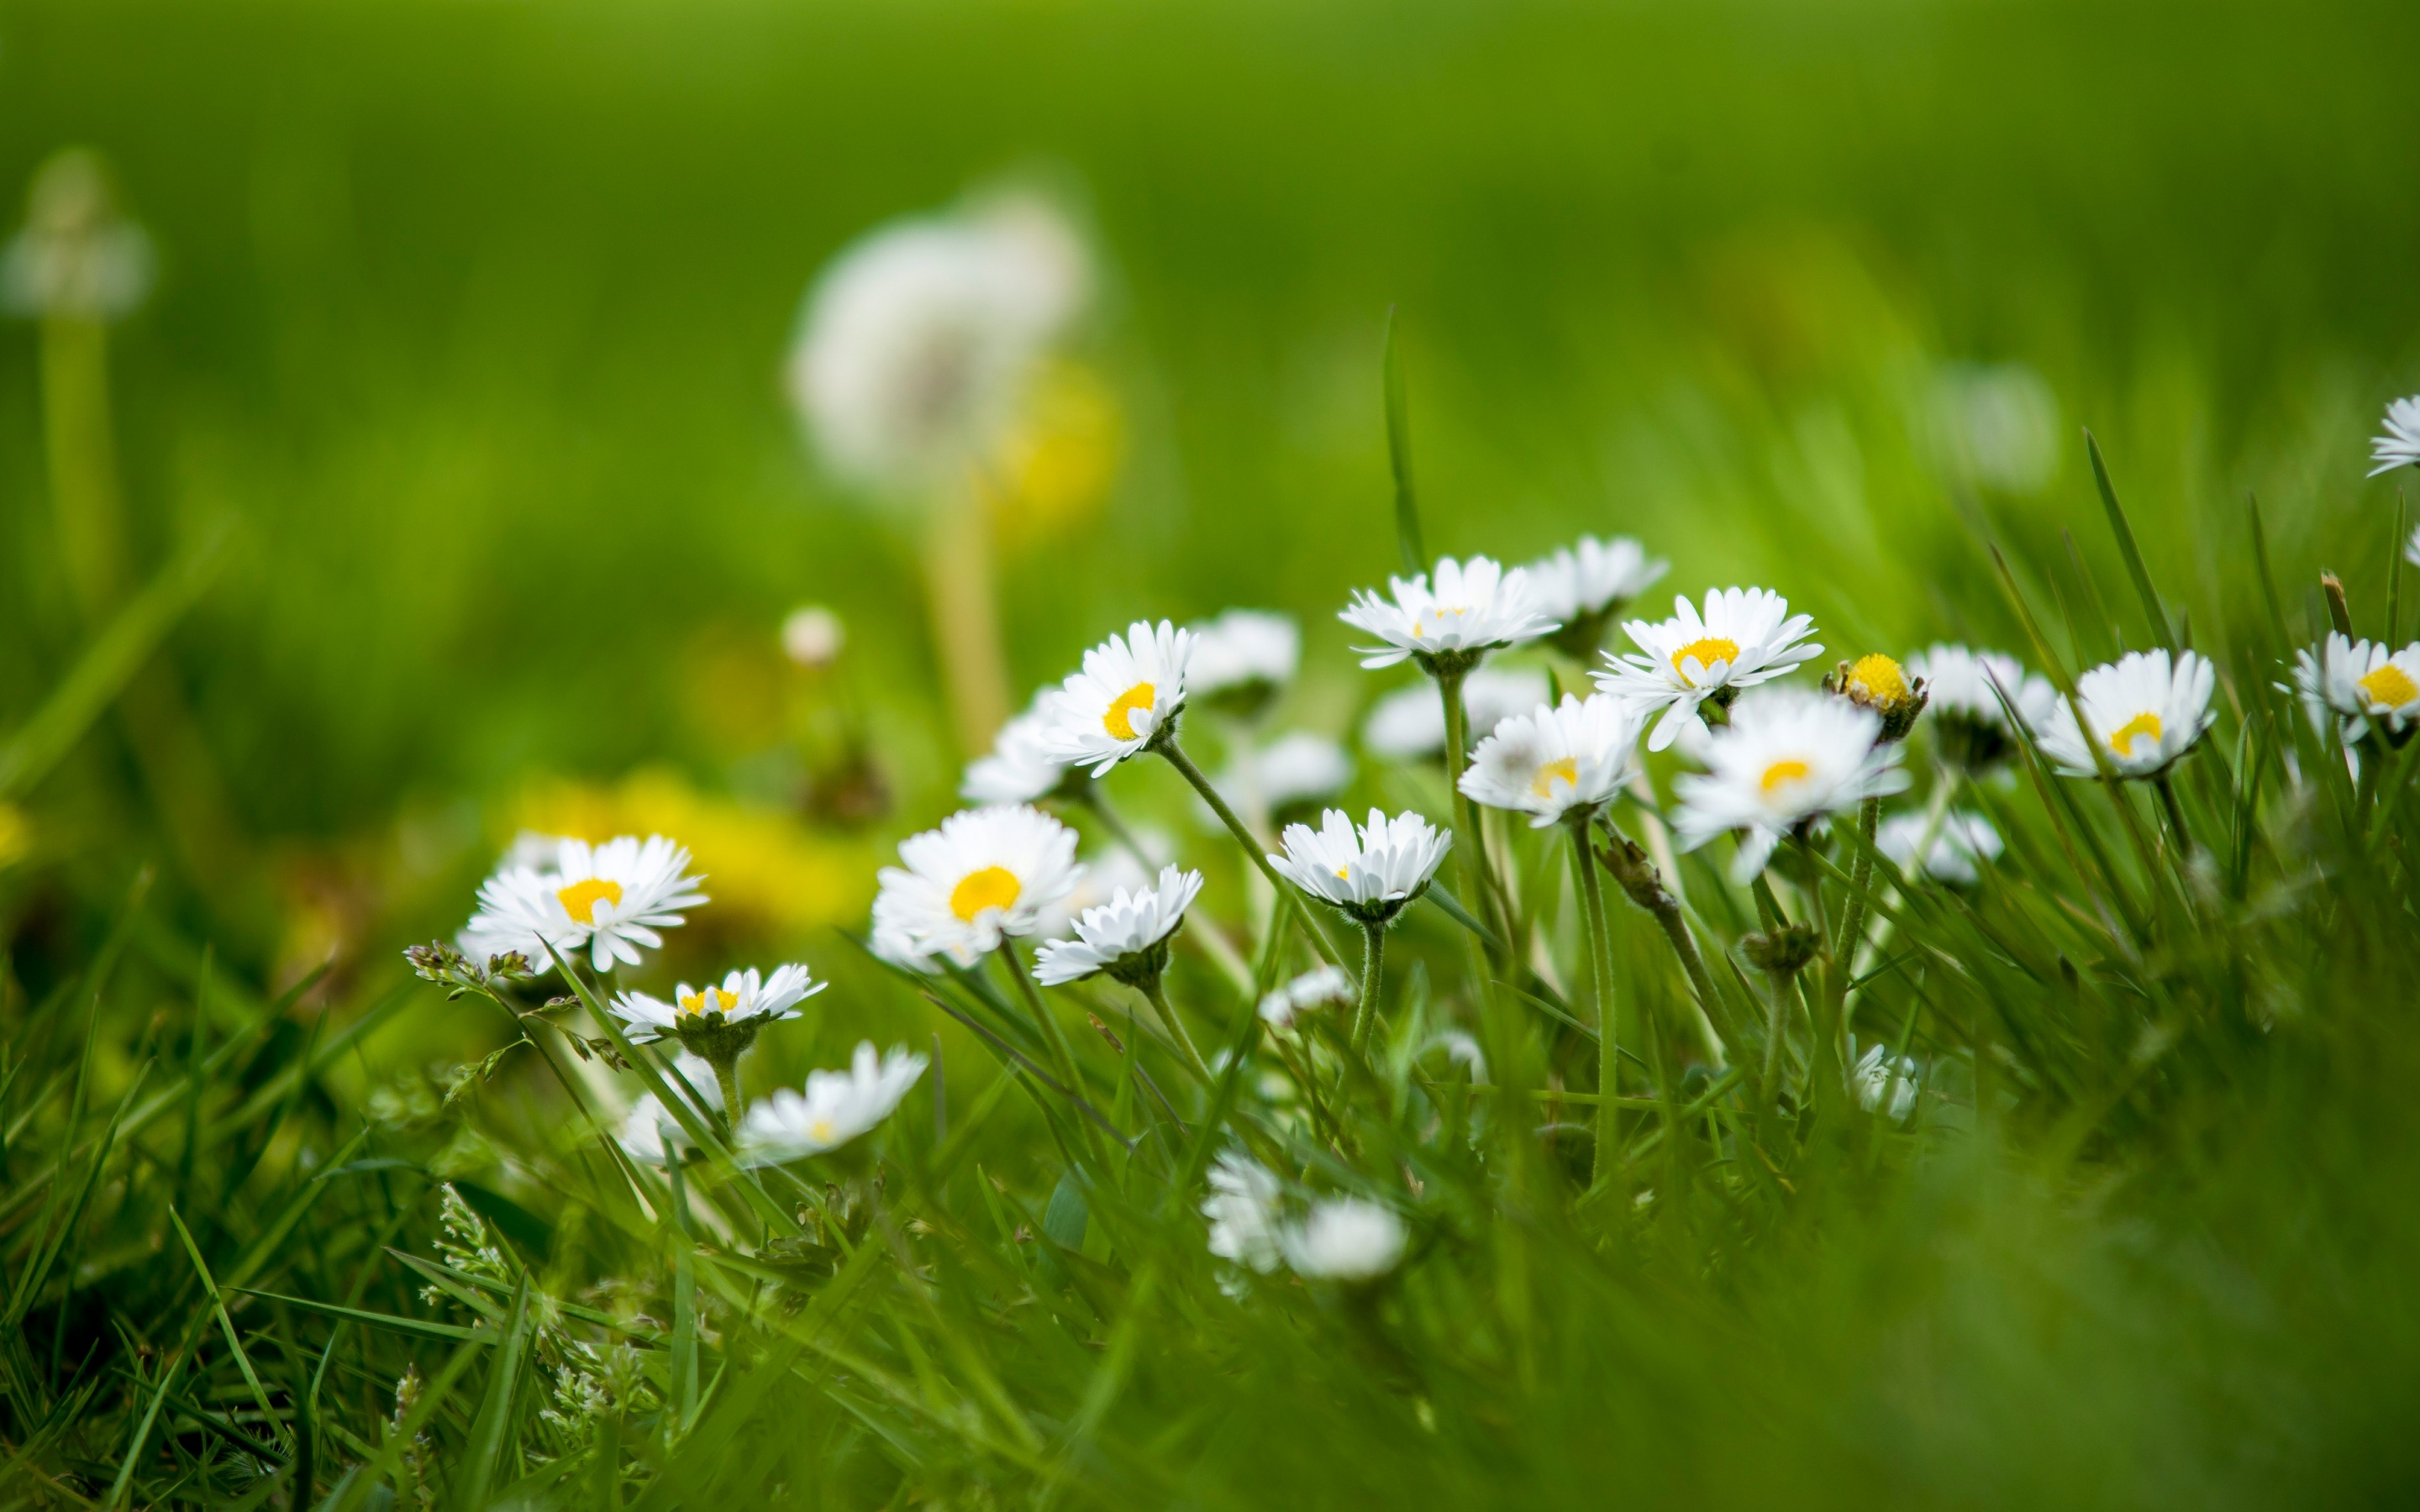 Meadow, small white daisy, green grass, 2880x1800 wallpaper